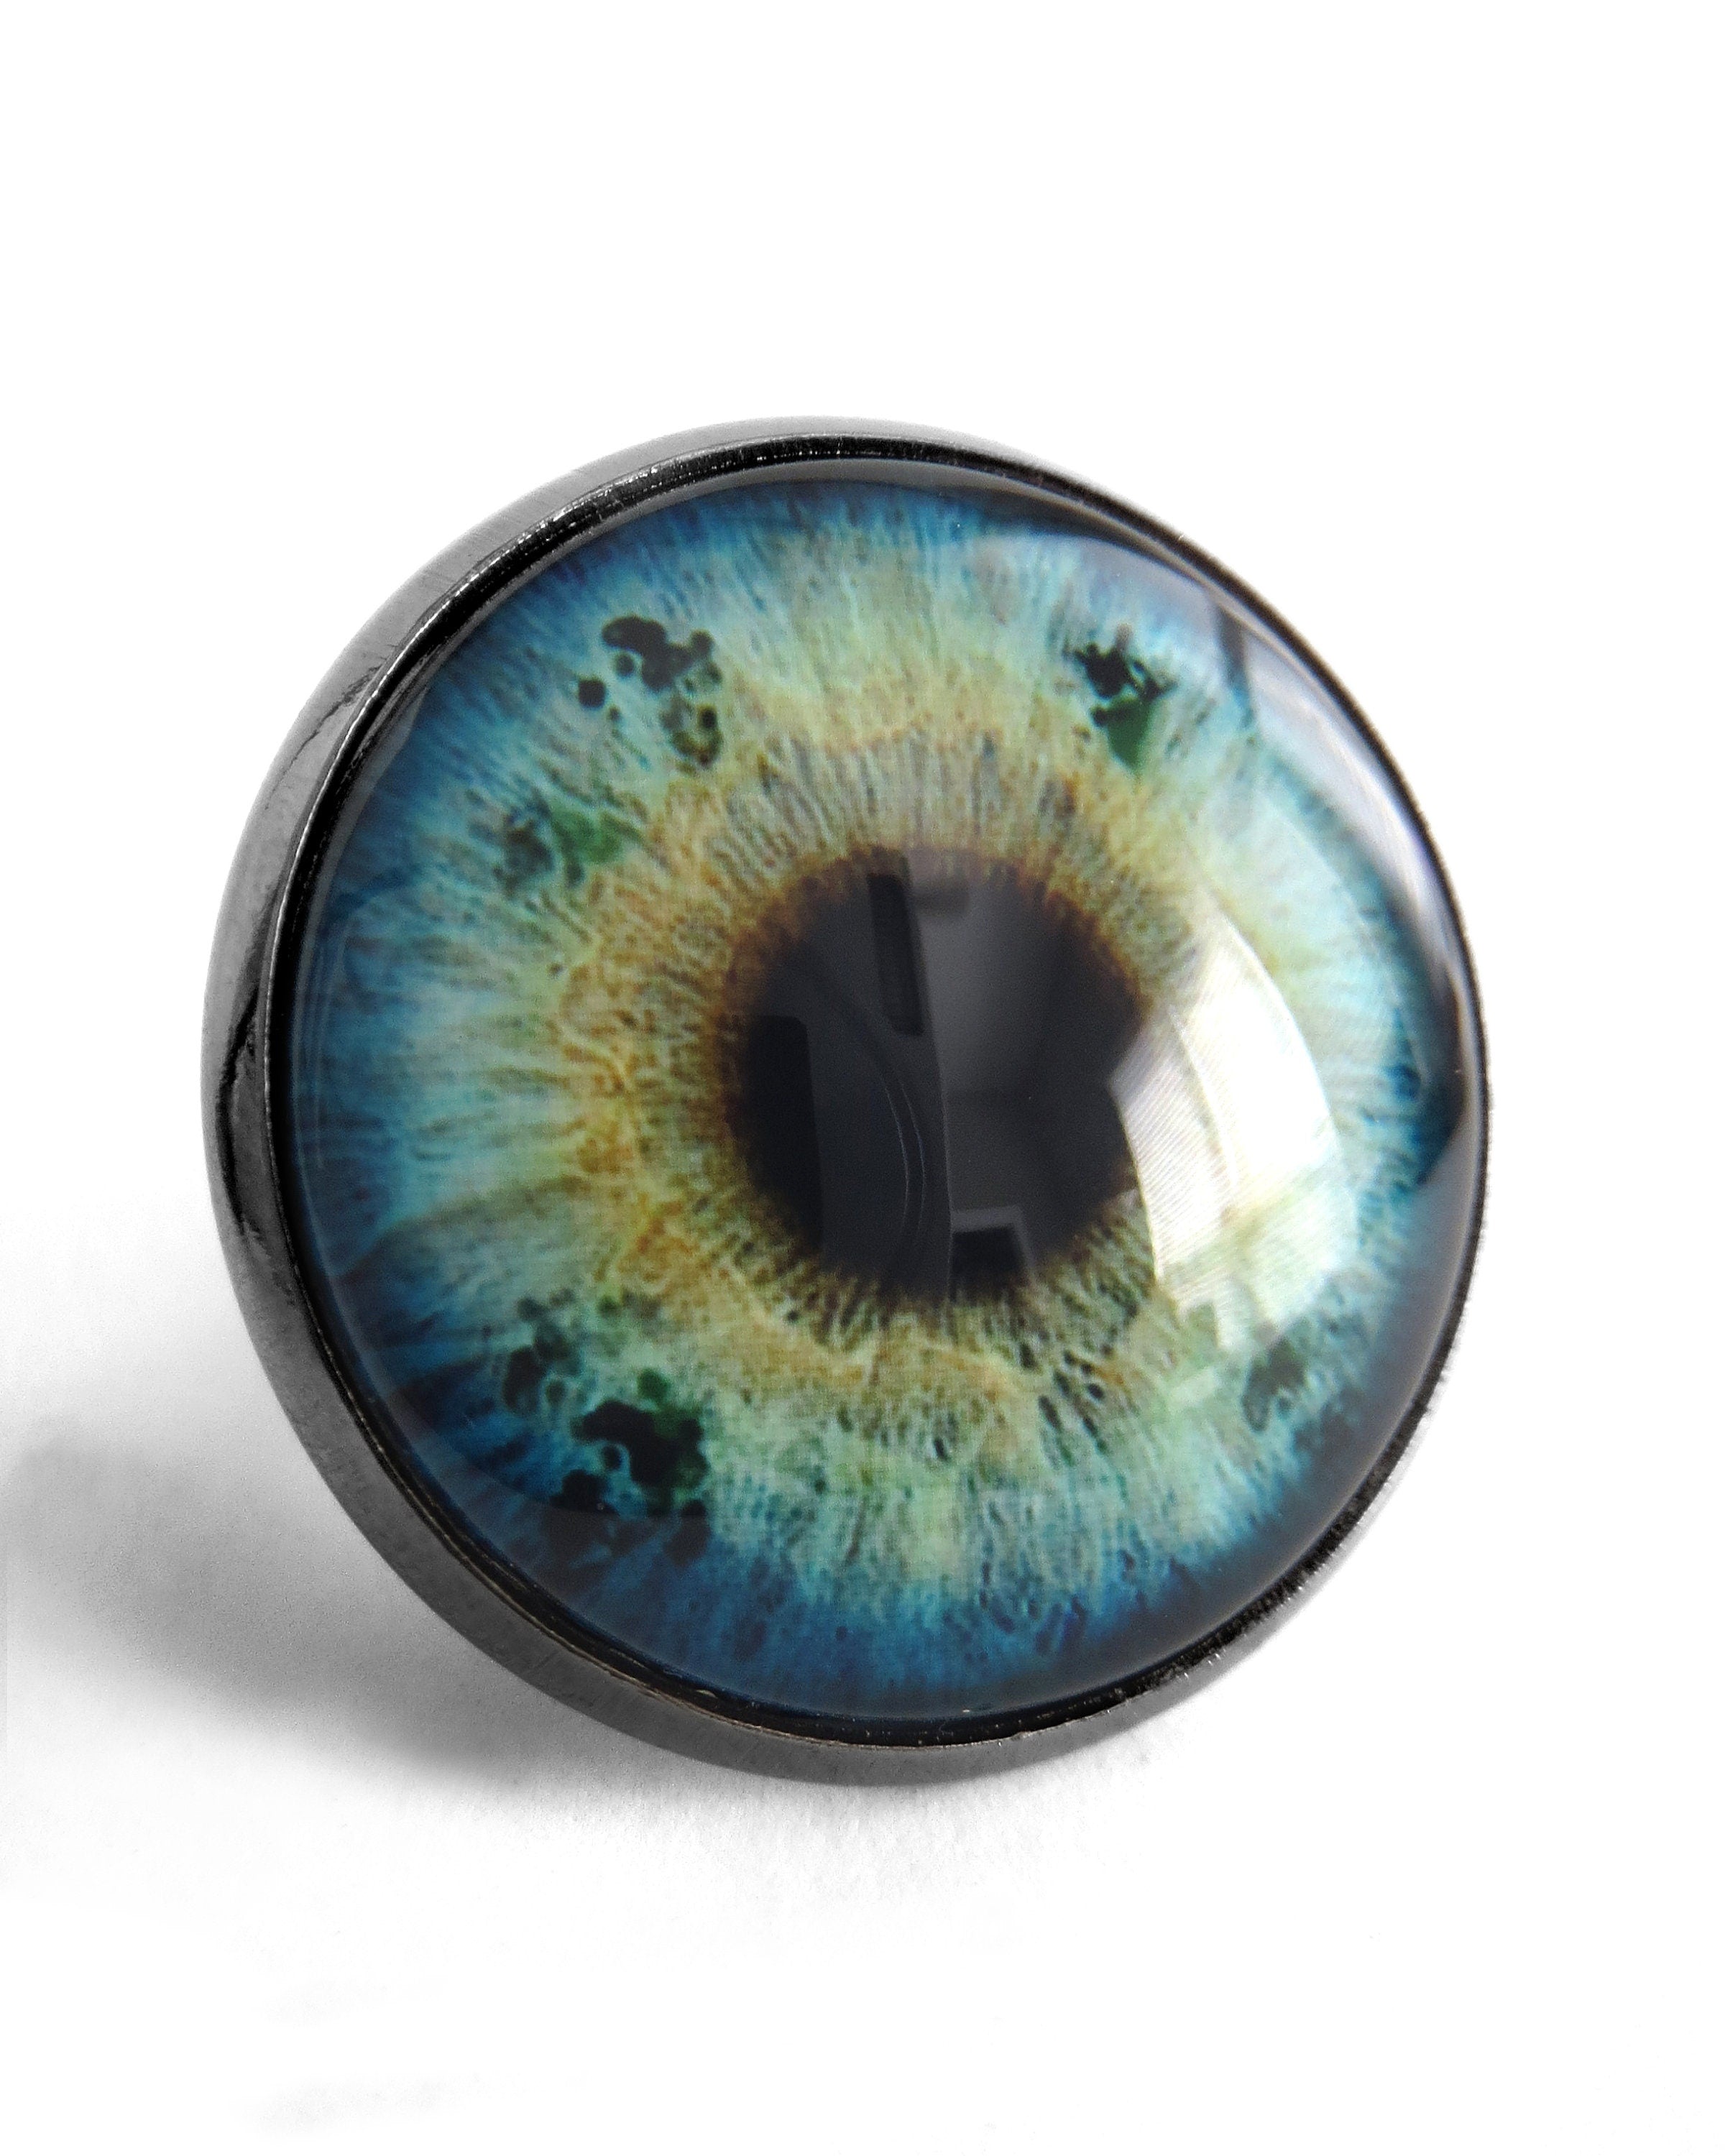 Large Blue Eyeball Ring - Photo-Realistic Eye Ball Ring, Evil Eye Ring, Adjustable Black Ring Band - Goth Halloween Gift for Teen